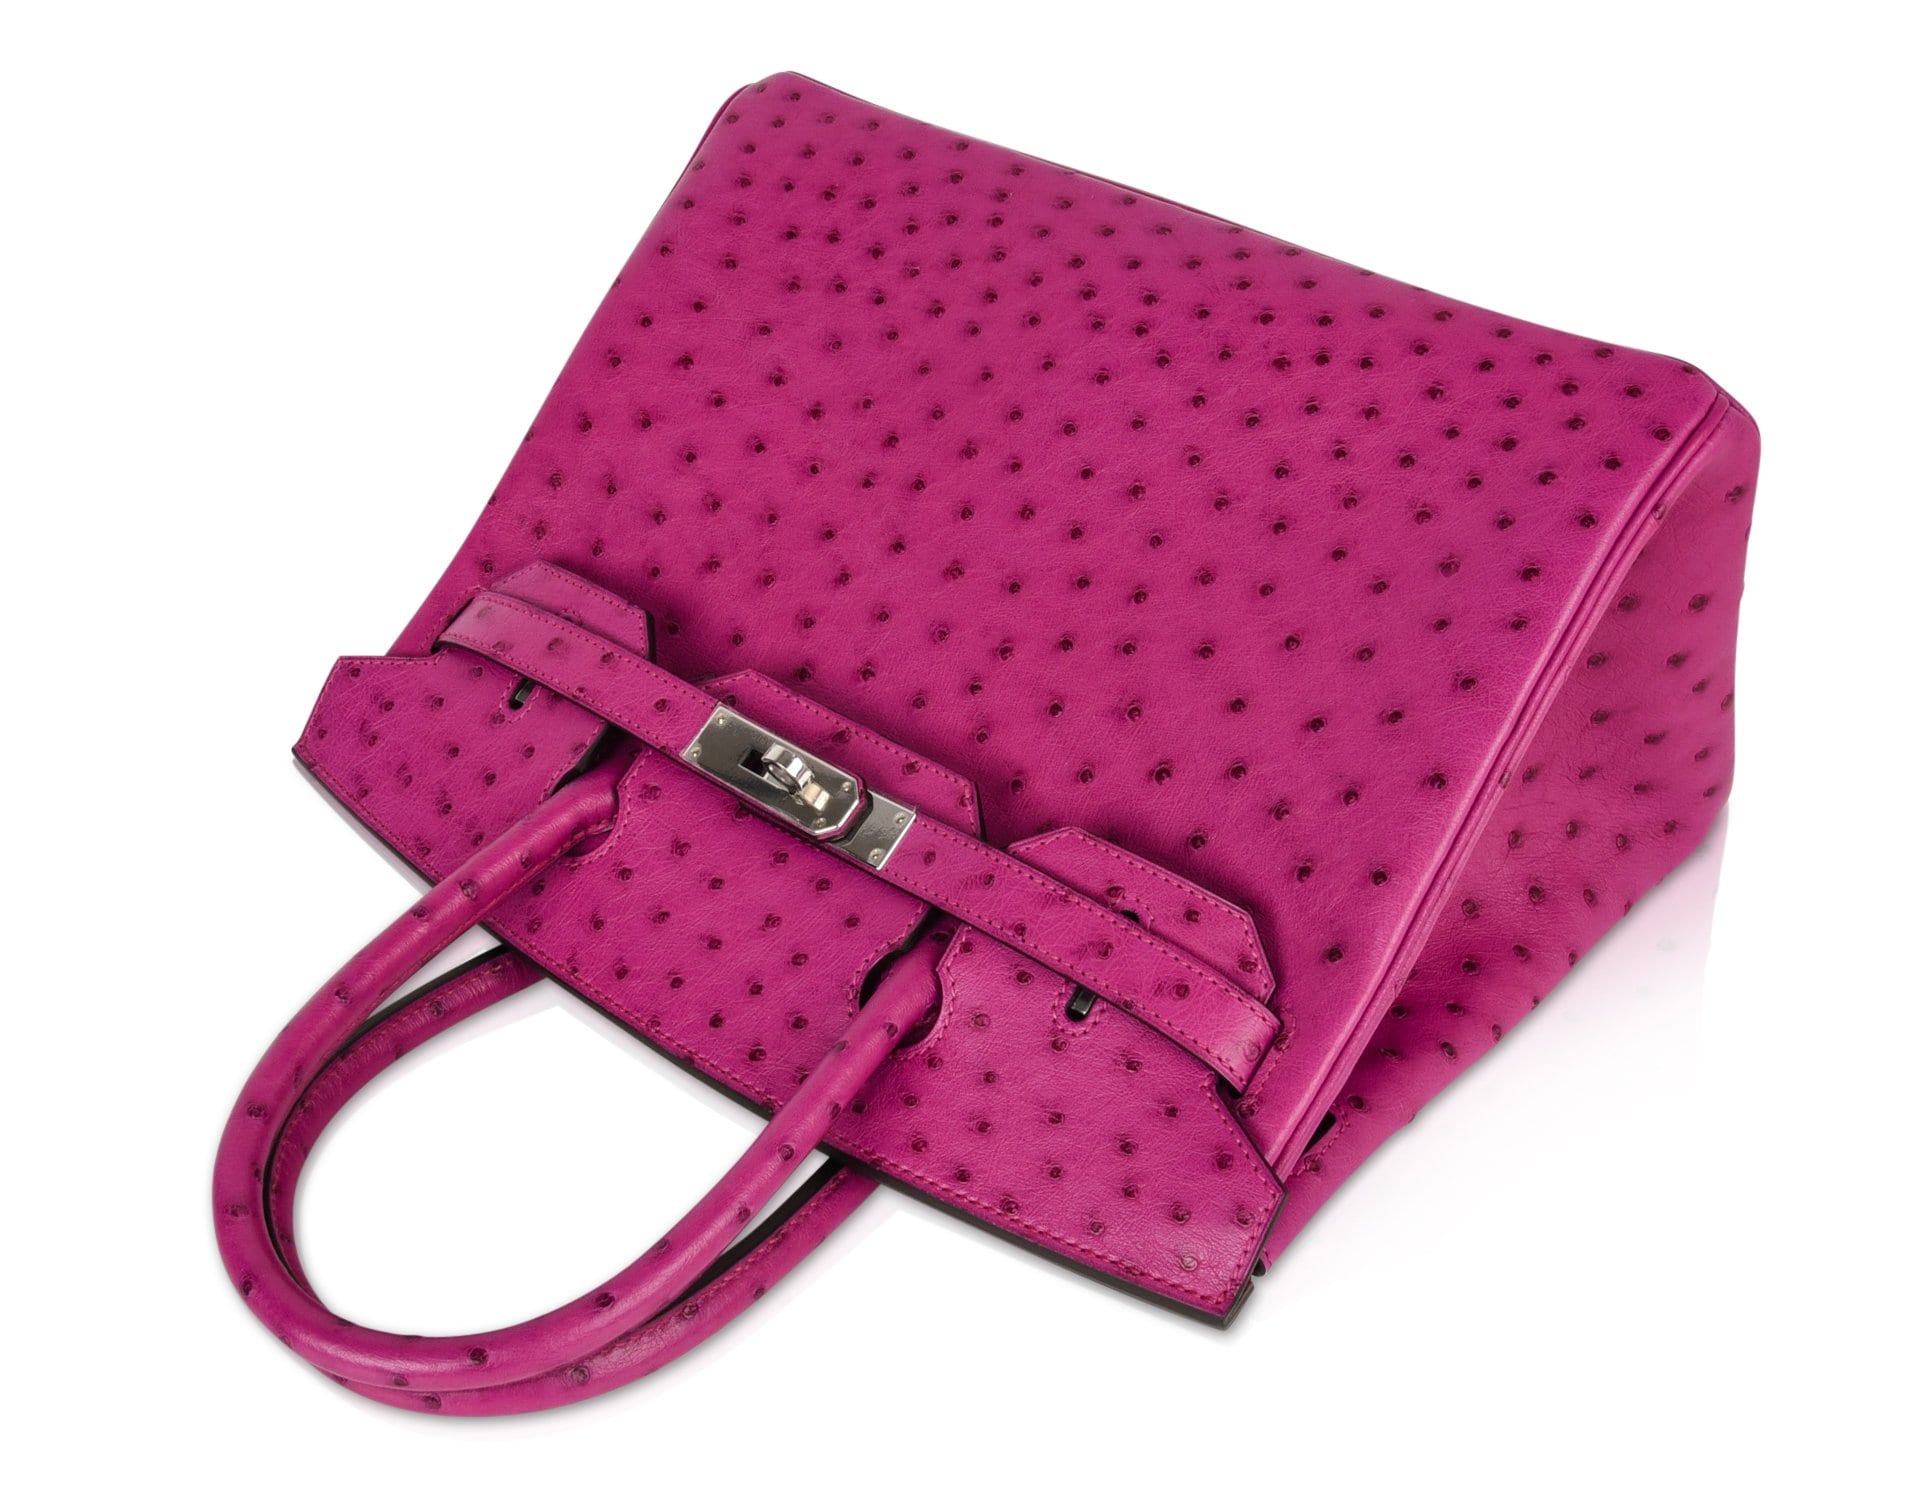 Hermes Birkin Womens Handbags 2019 Ss, Pink, Birkin 30